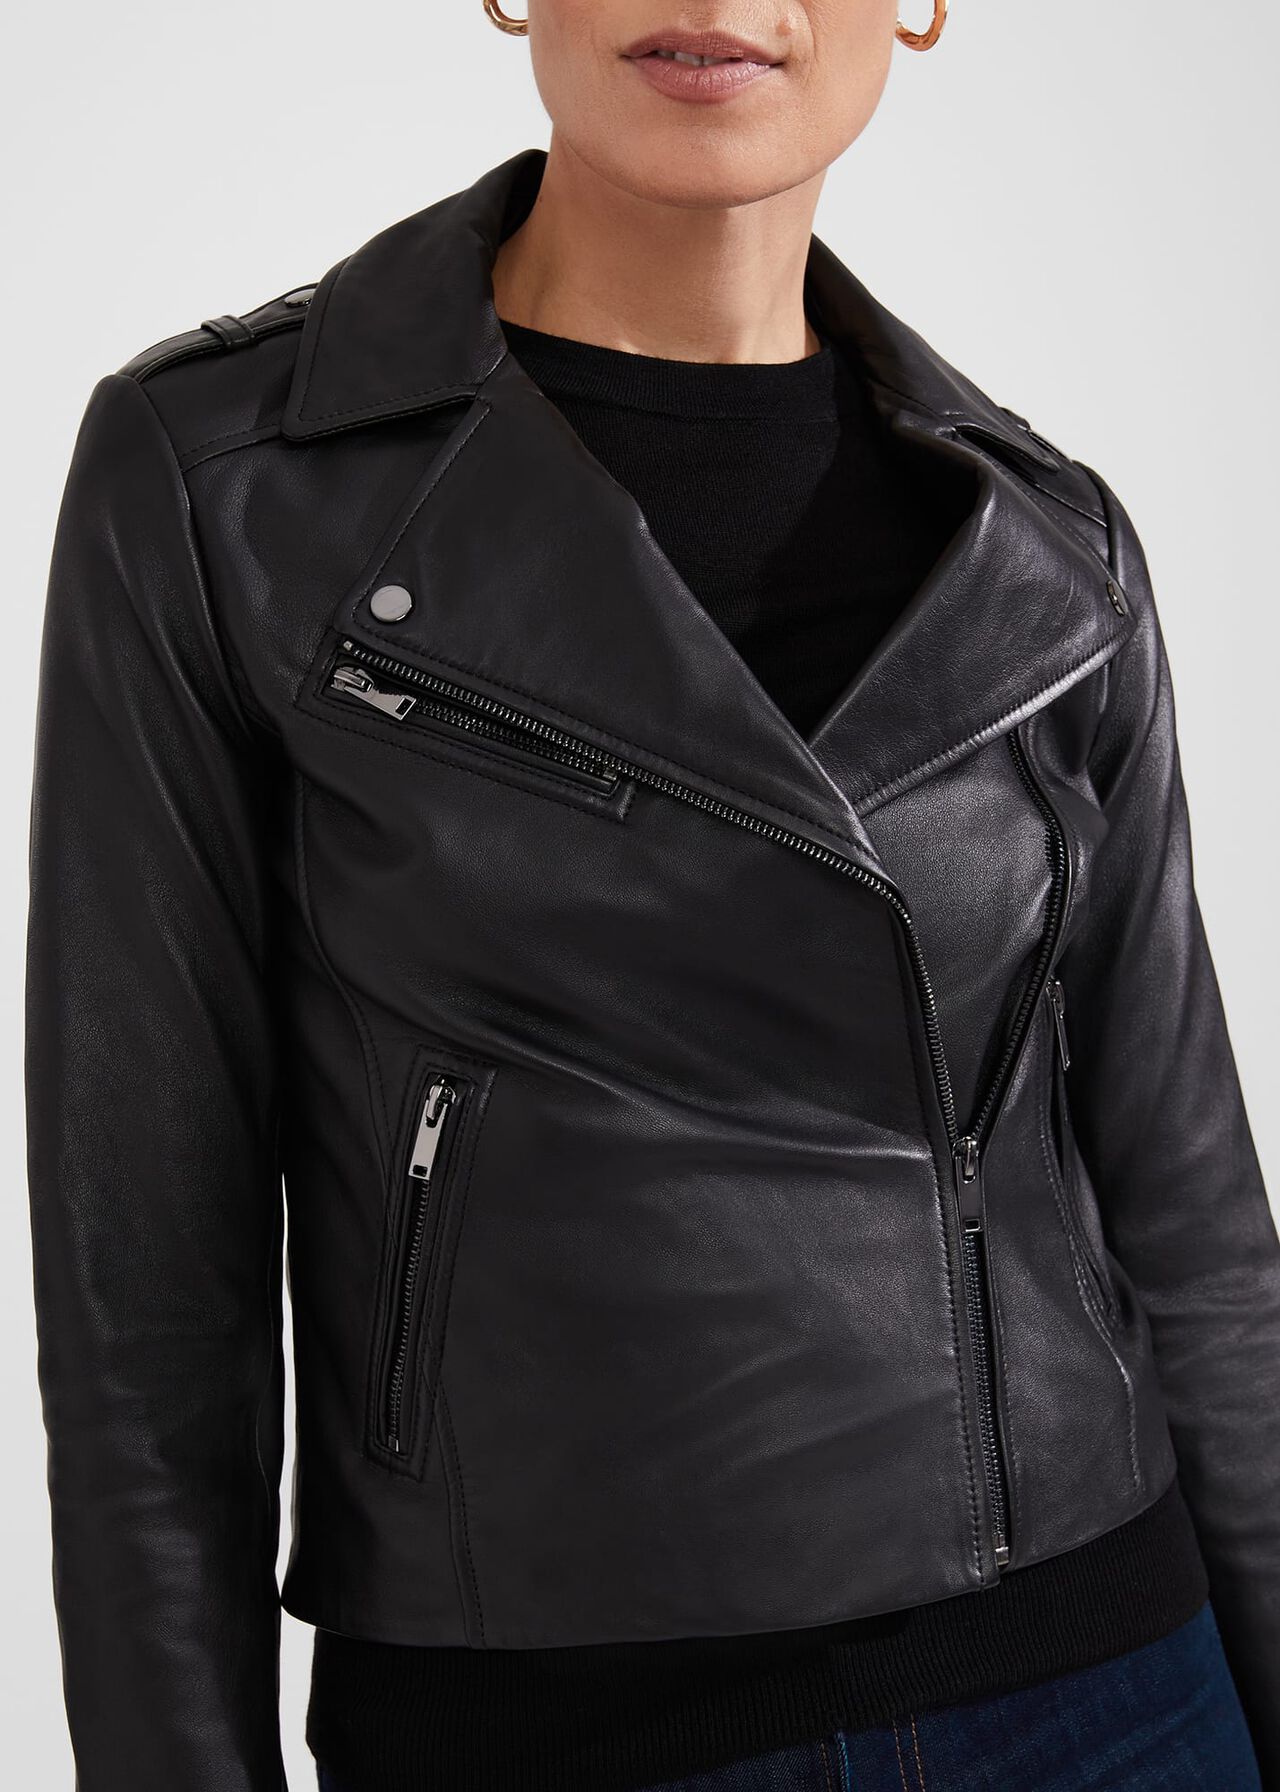 Darby Leather Jacket, Black, hi-res